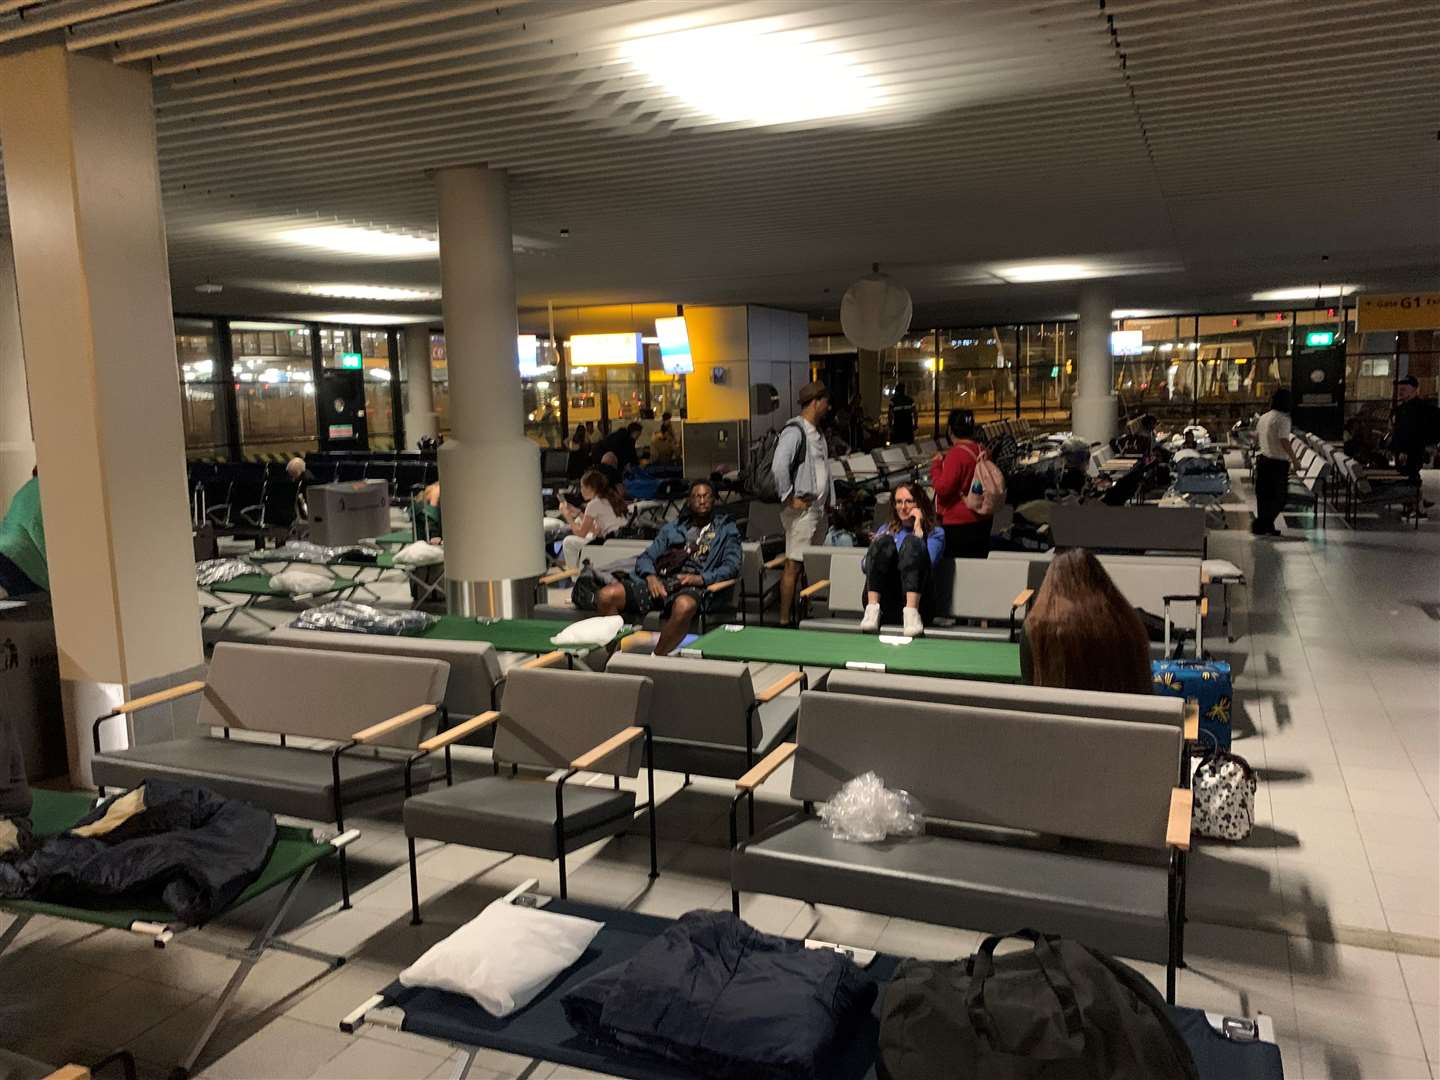 Passengers sleeping at Amsterdam Airport overnight on seats and folding beds (Matthew Creed/PA)